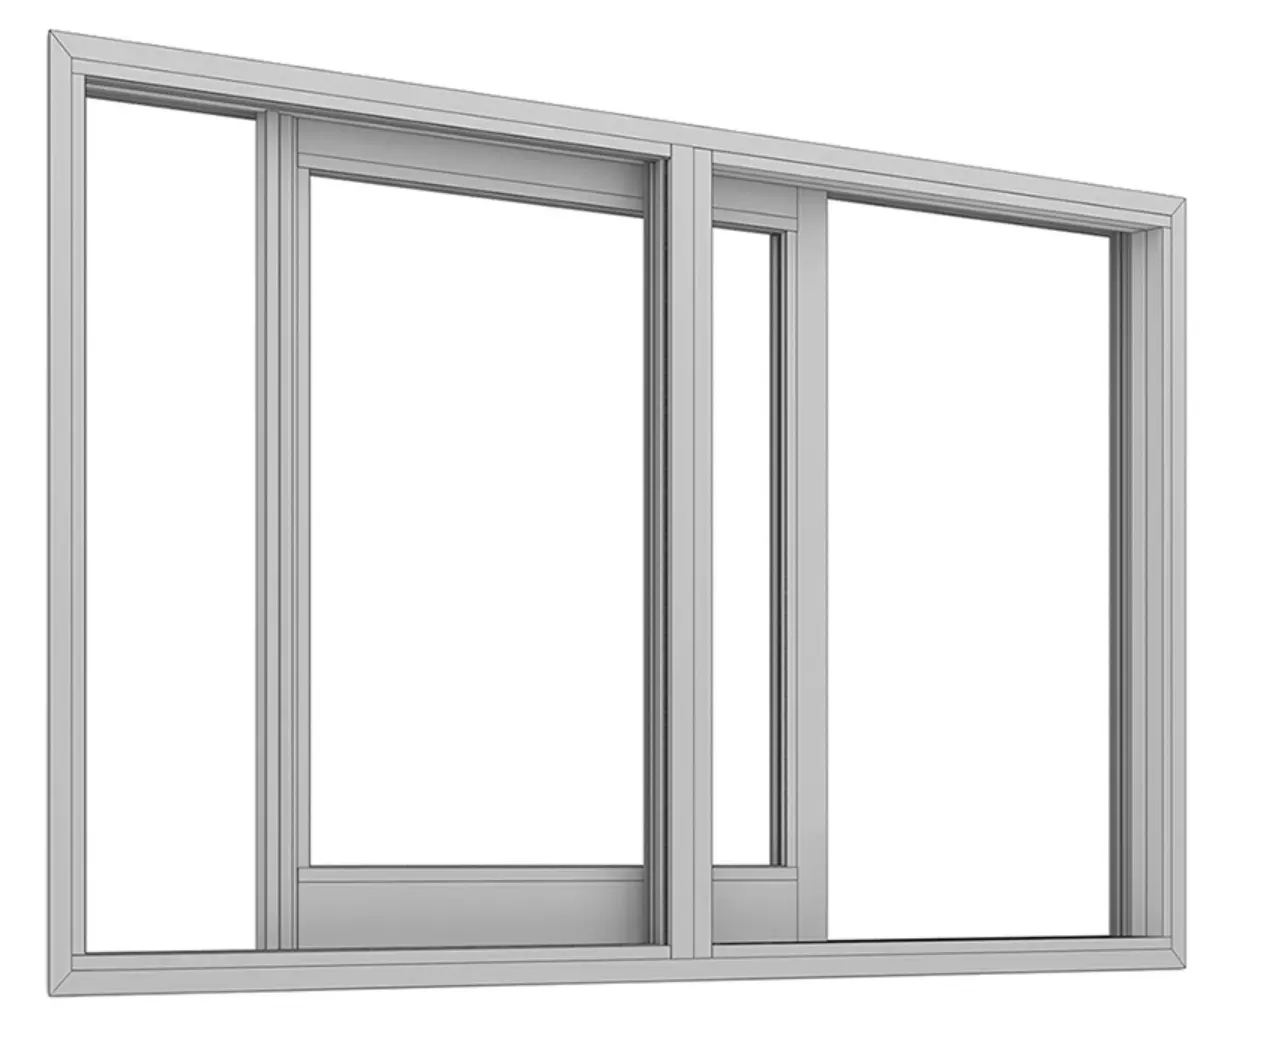 Aluminum alloy double glazed sliding window with screen